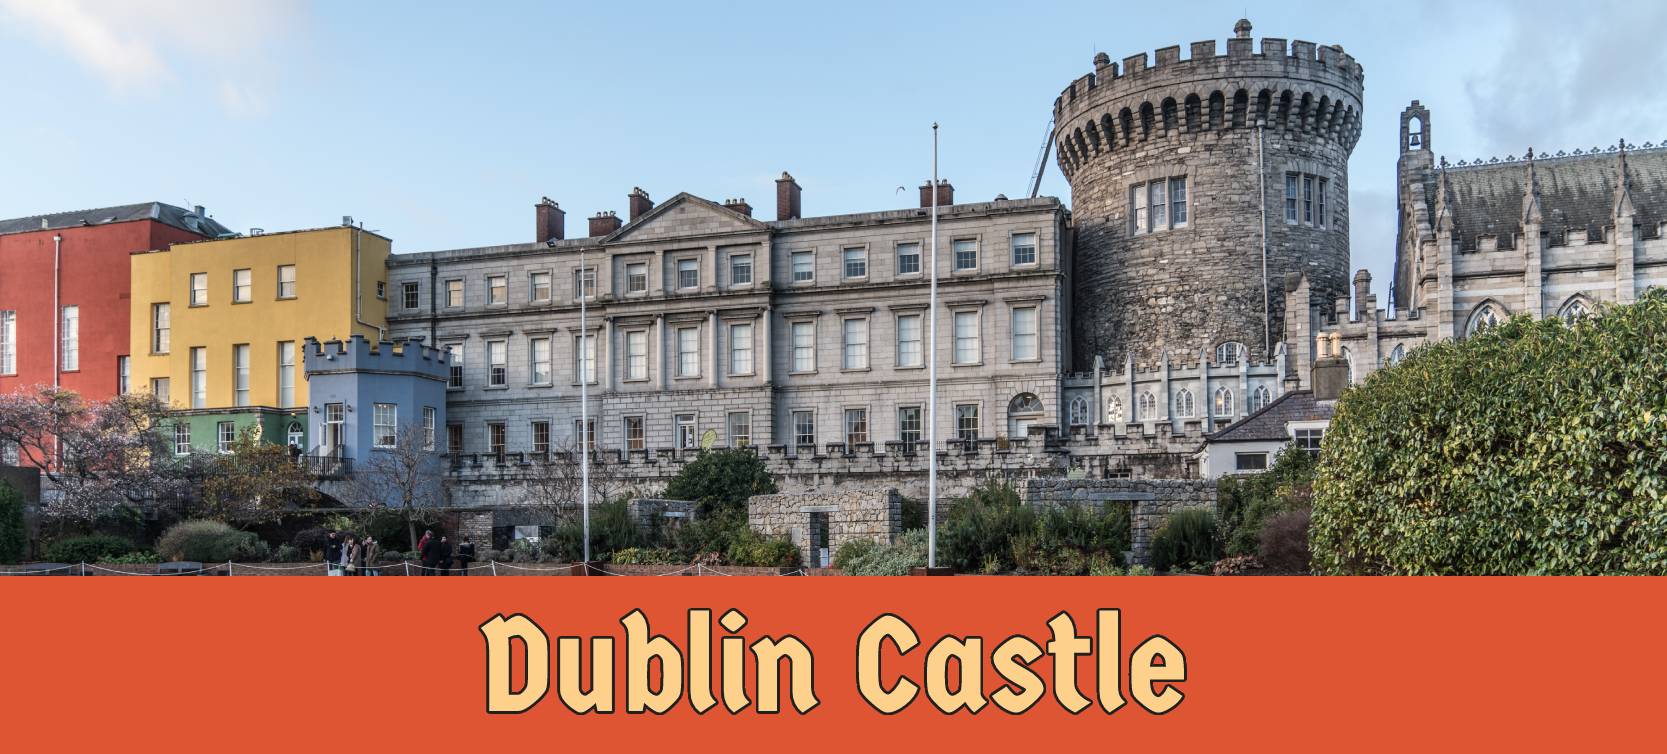 Dublin Castle Dame Street Republic of Ireland Ultimate guide